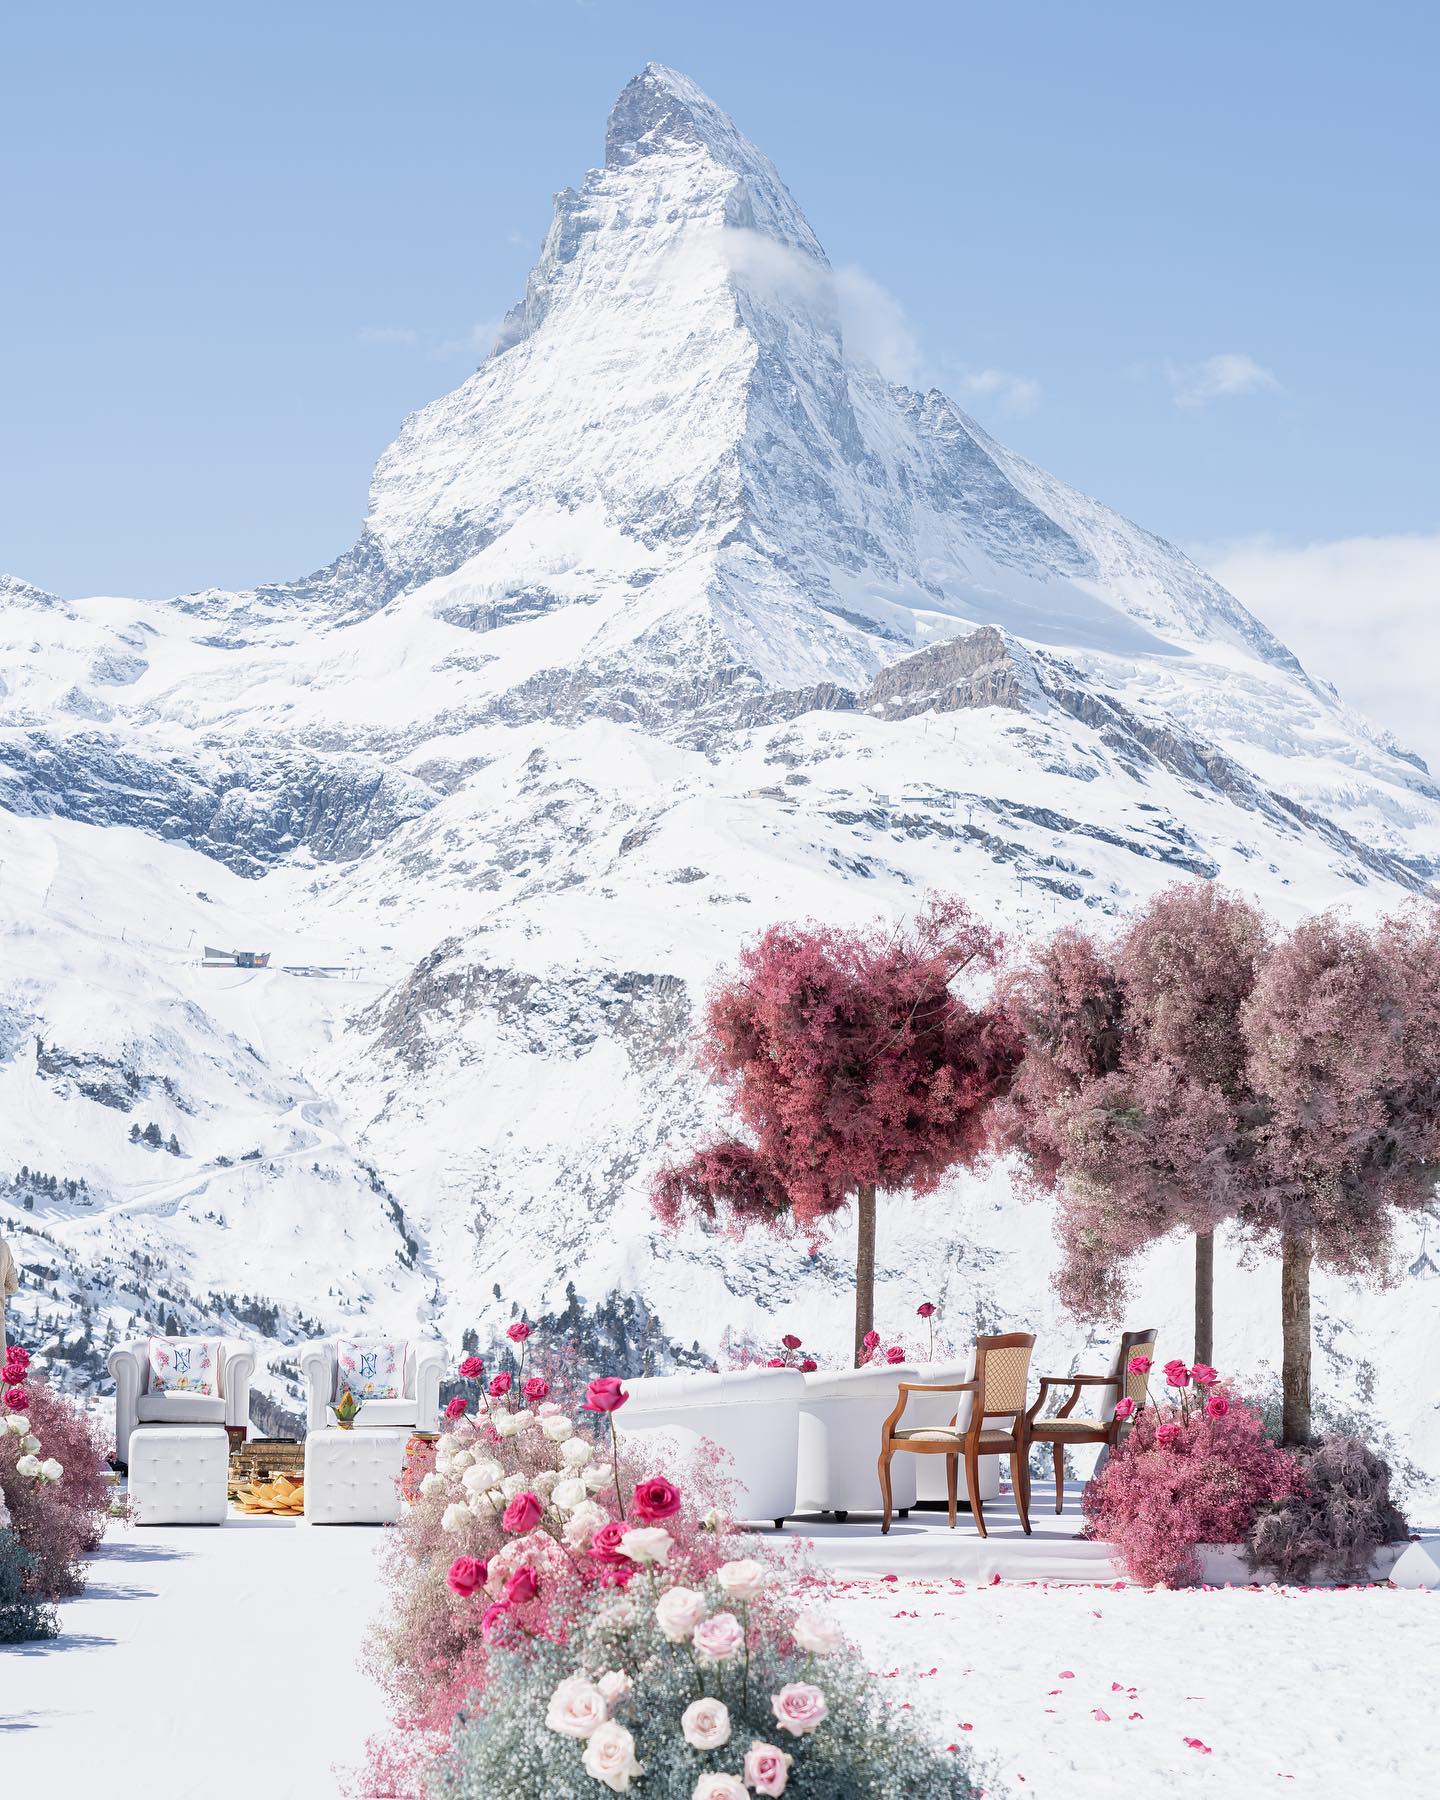 Influencer Sonam Babani’s Scenic Destination Wedding At The Swiss Alps!